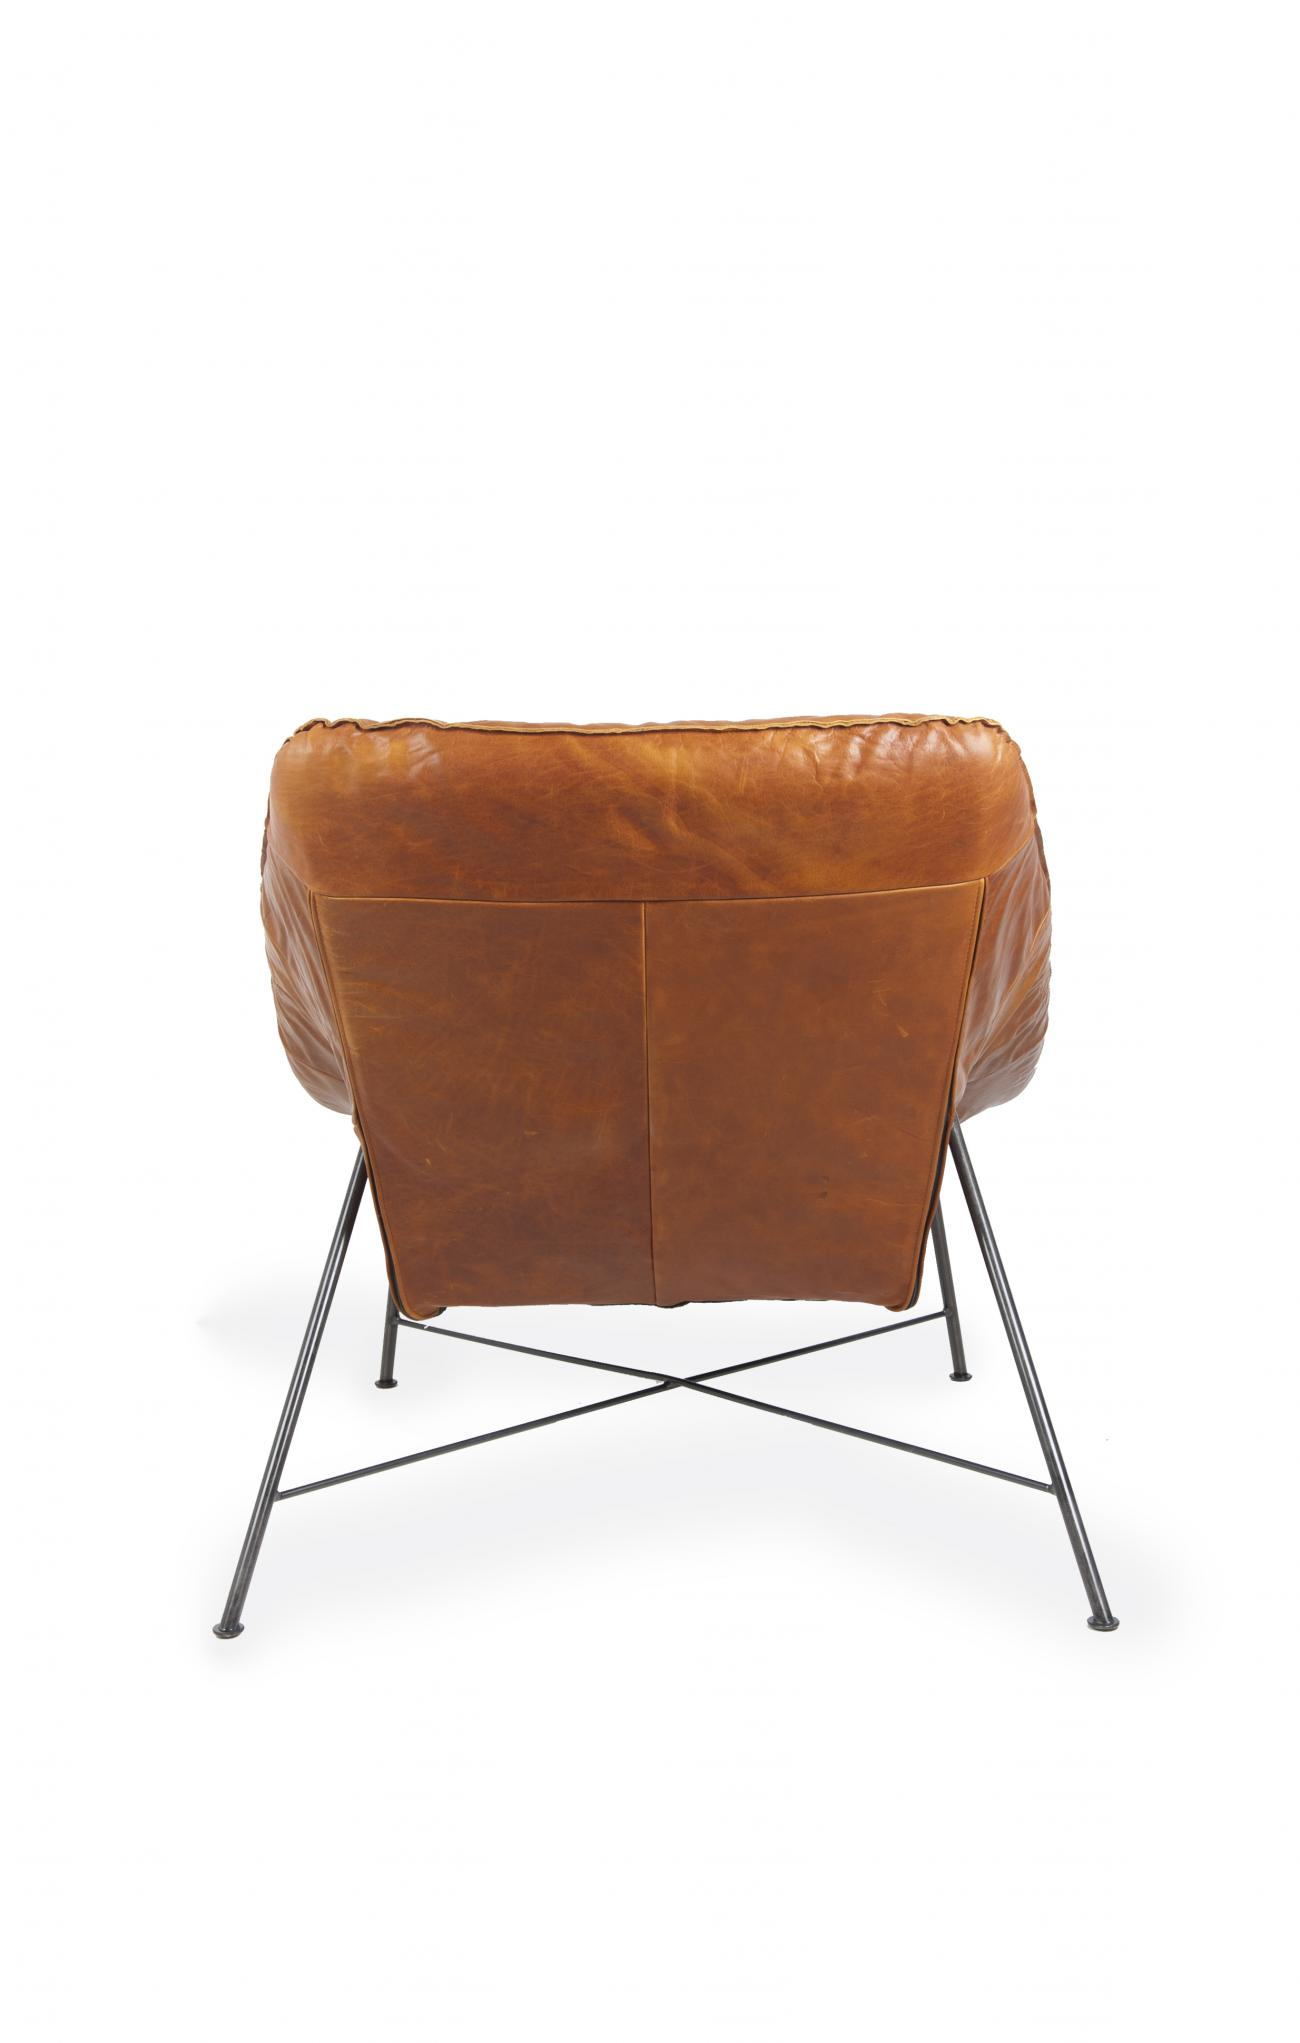 https://www.fundesign.nl/media/catalog/product/b/r/brazil_armchair_with_arm_old_glory_frame_luxor_cognac_back.jpg